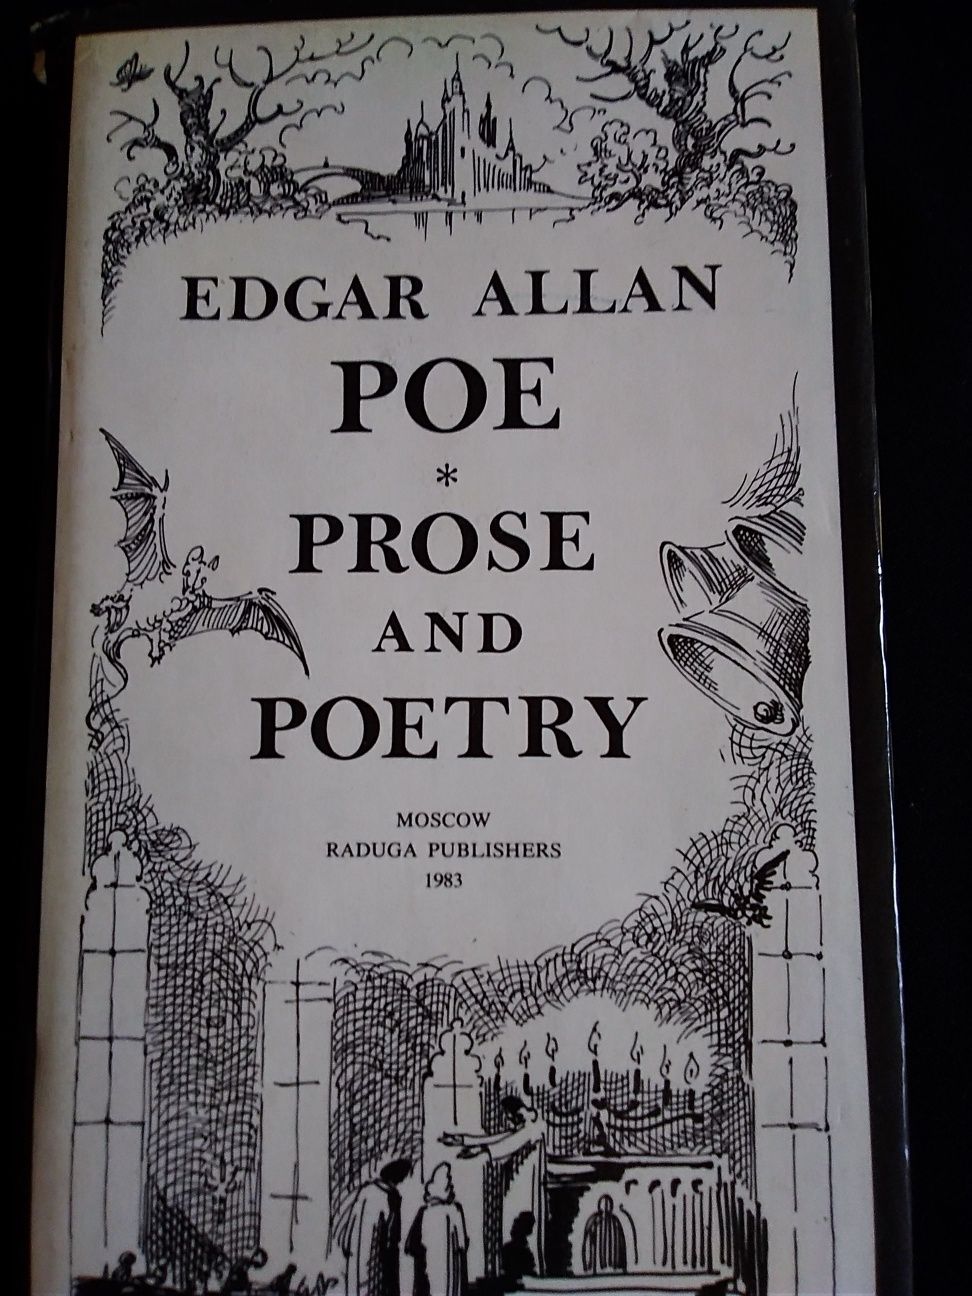 Edgar Allan Poe-"Prose and poetry"